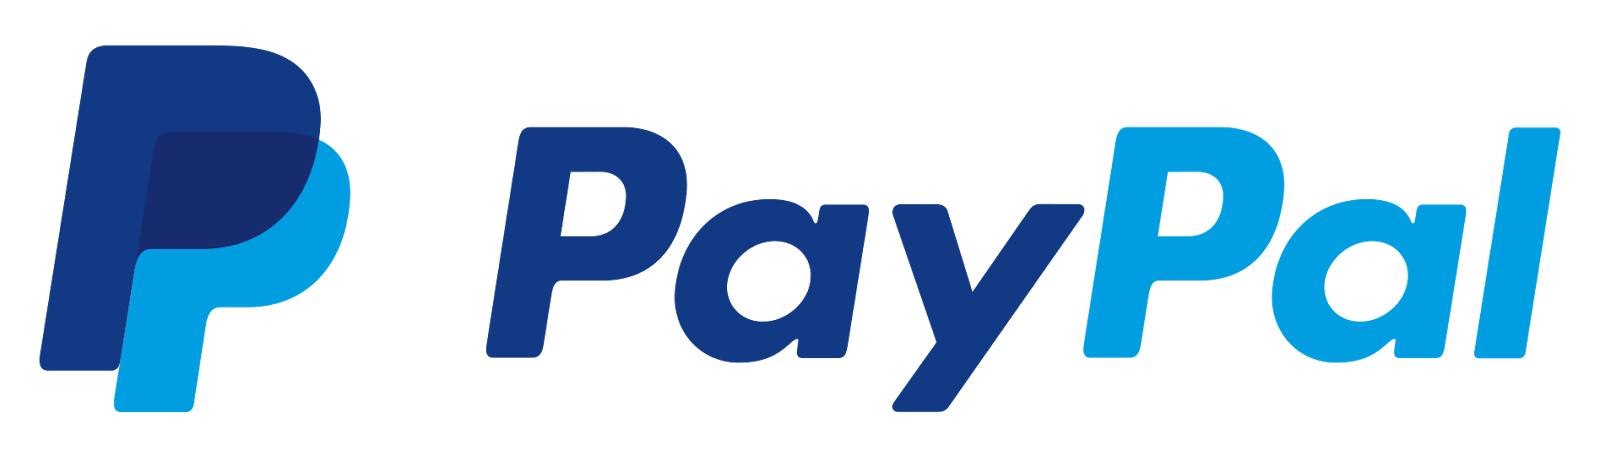 Paypal-Logo-2015